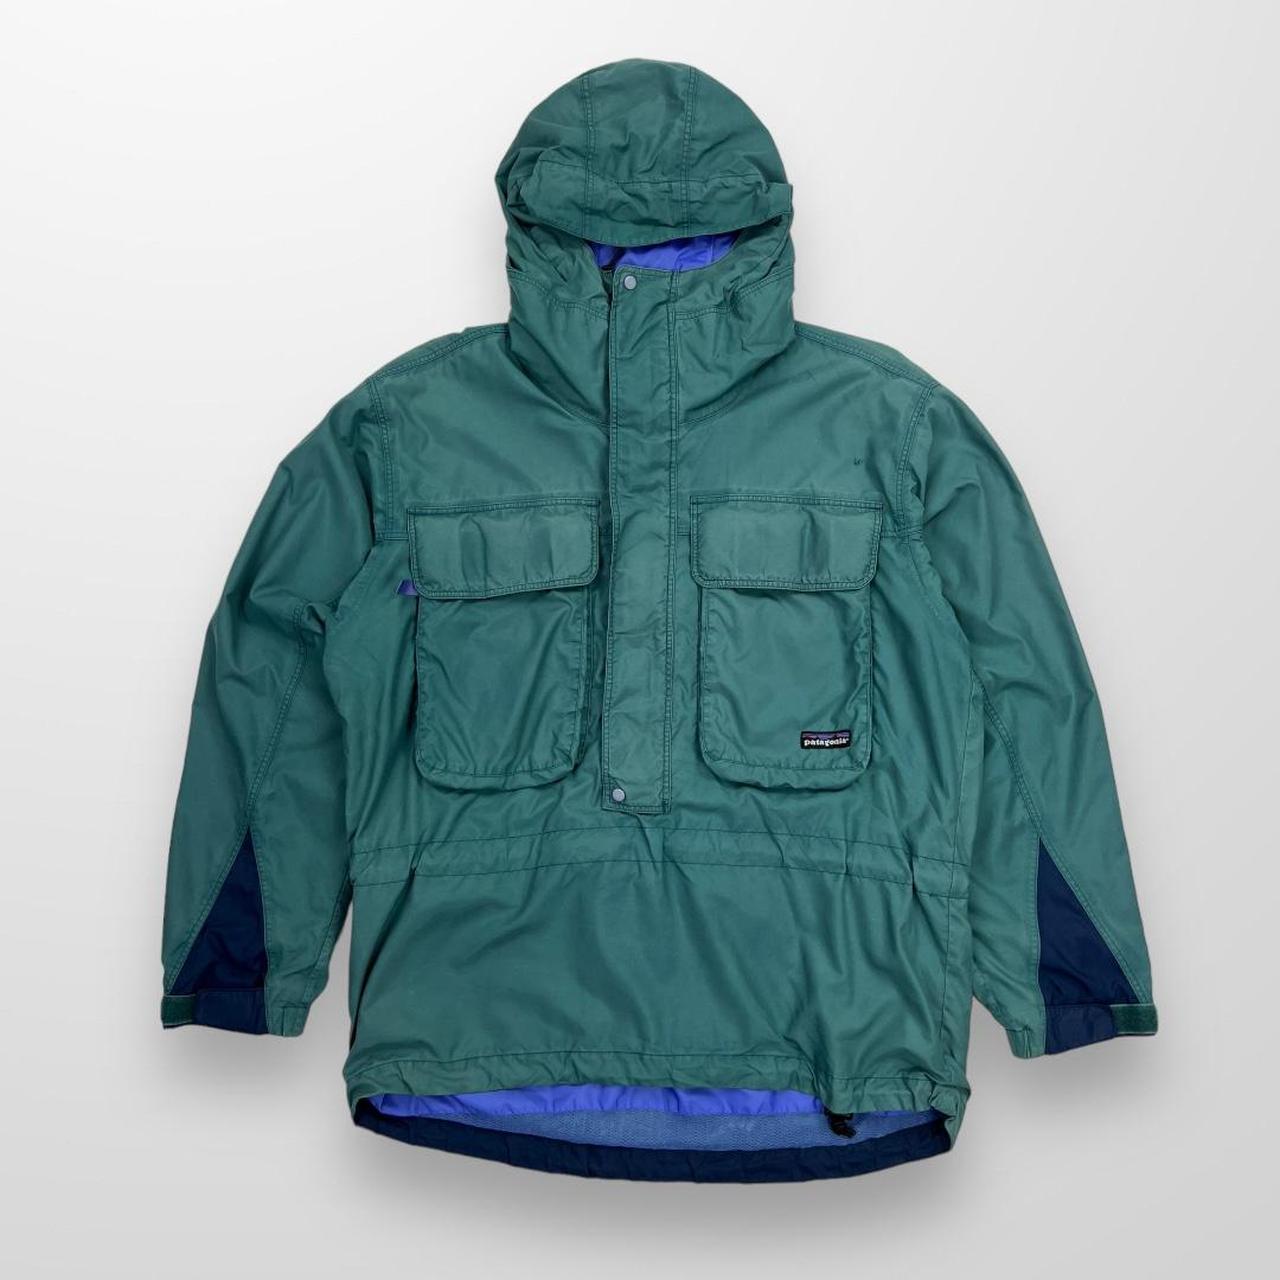 Patagonia SKANORAK jacket